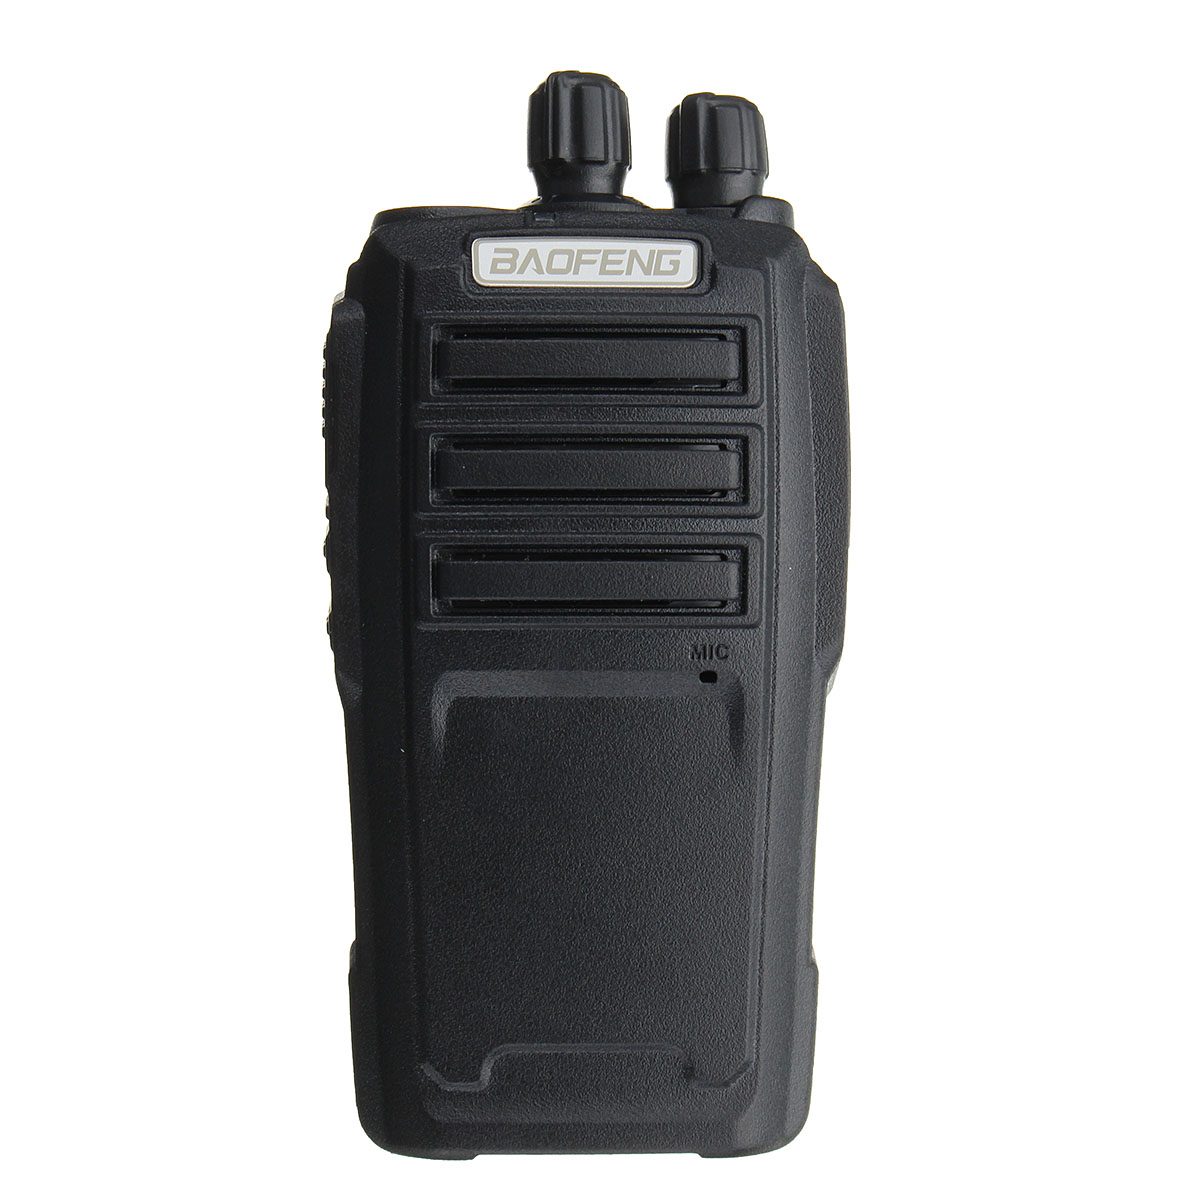 UV-6D-2-way-Radio-UHF-CTSCC-DCS-Walkie-Talkie-Outdoor-Mini-Portable-Transmitter-1205143